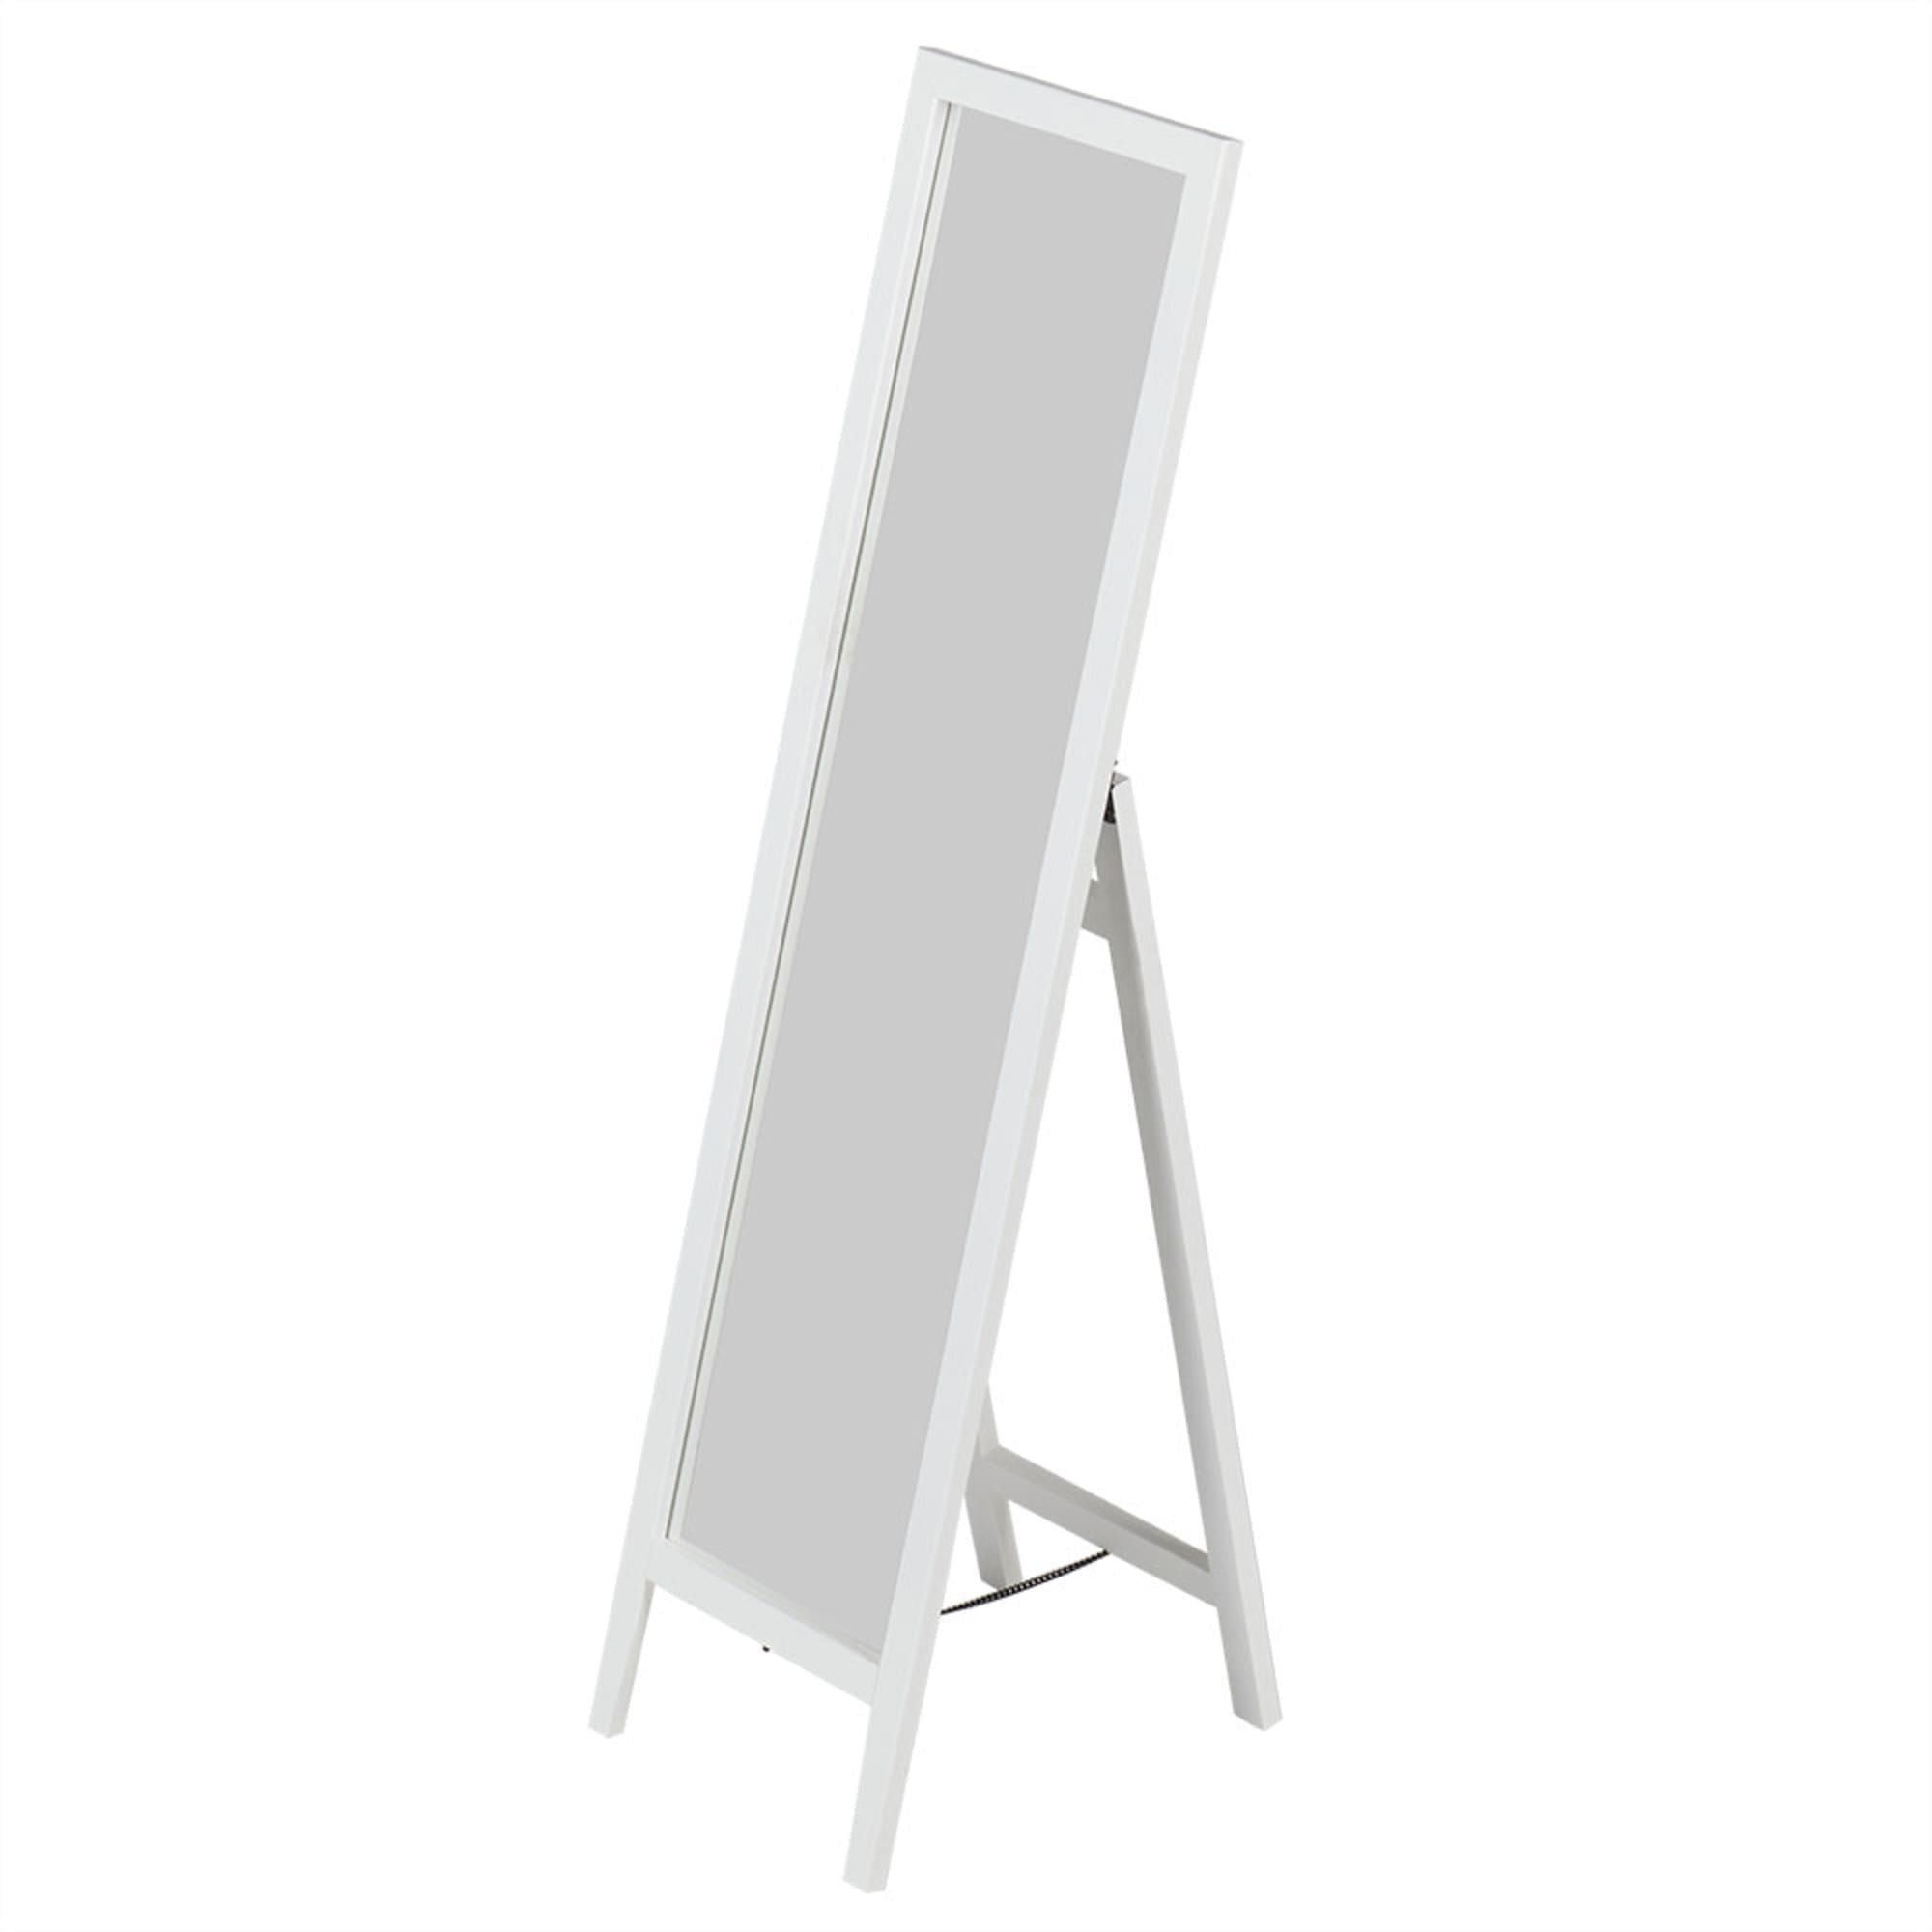 Home Basics Tall Vertical Mirror, White $80.00 EACH, CASE PACK OF 1